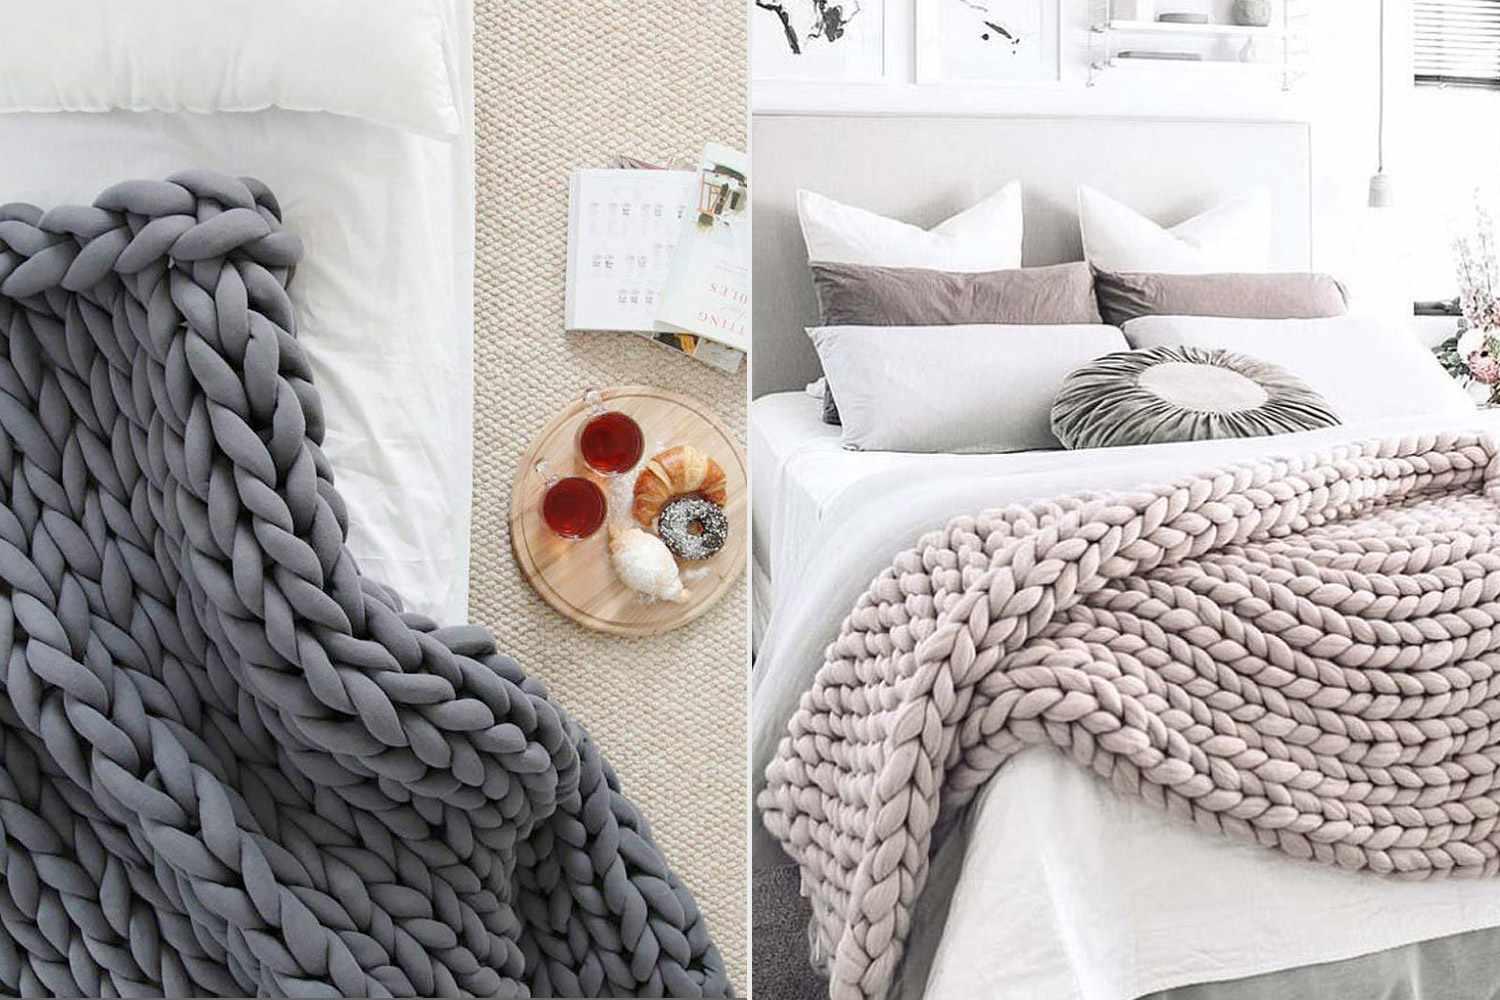 Shop The Celeb Loved Chunky Knit Blanket Trend PEOPLEcom